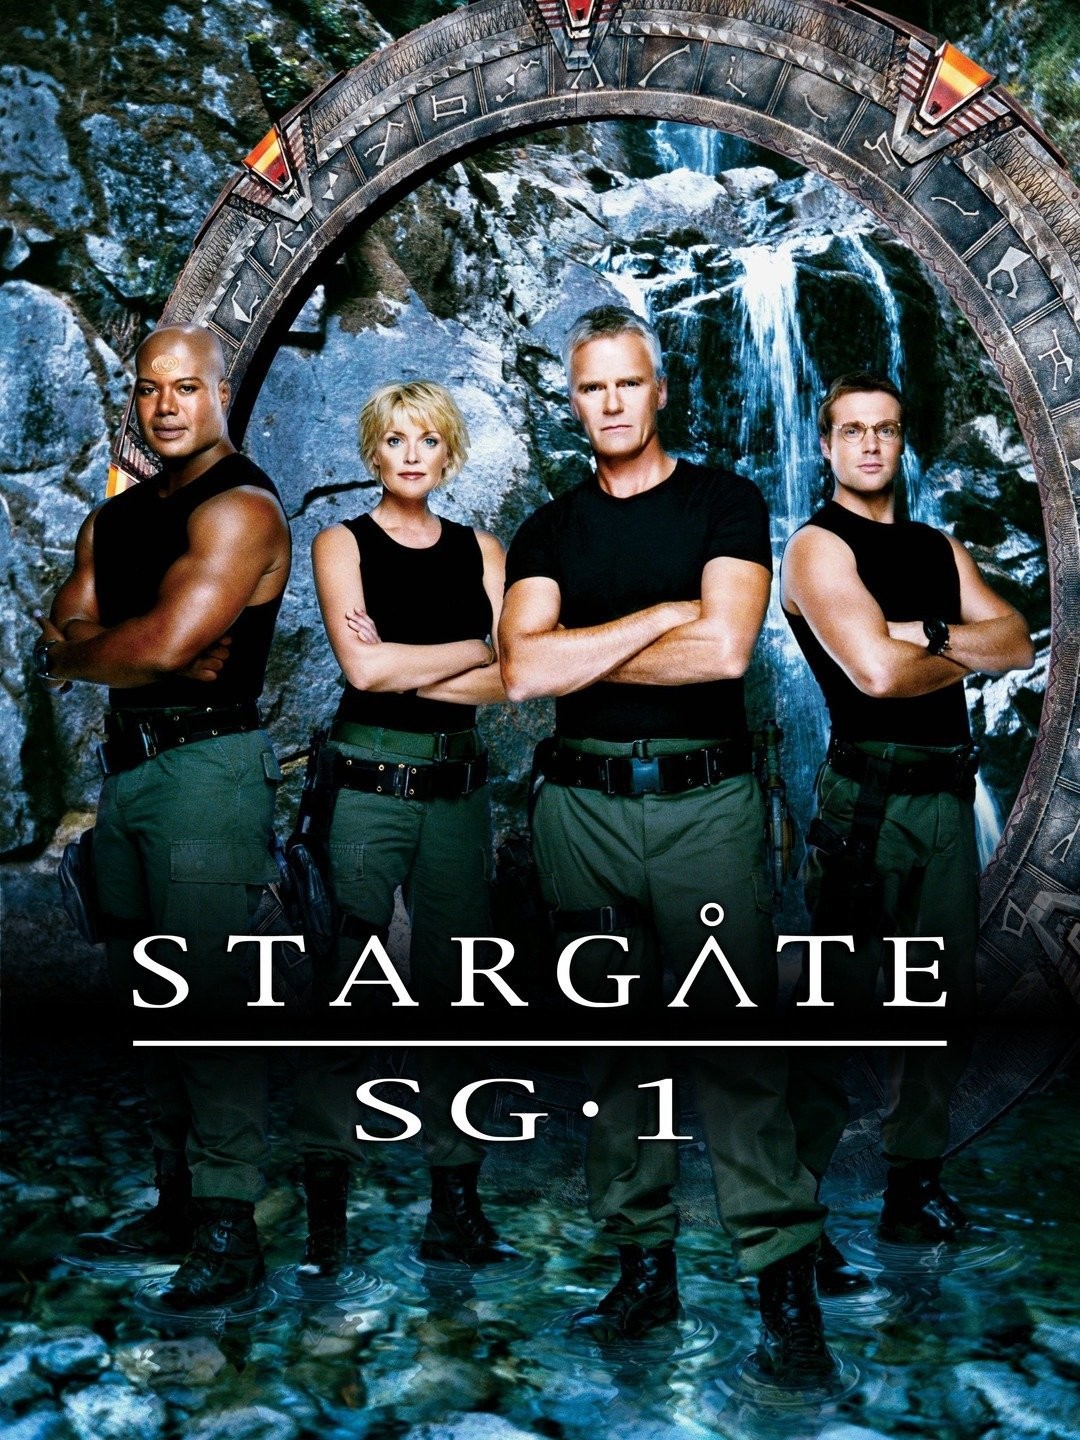 Stargate SG-1 (TV Series 1997–2007) - Trivia - IMDb